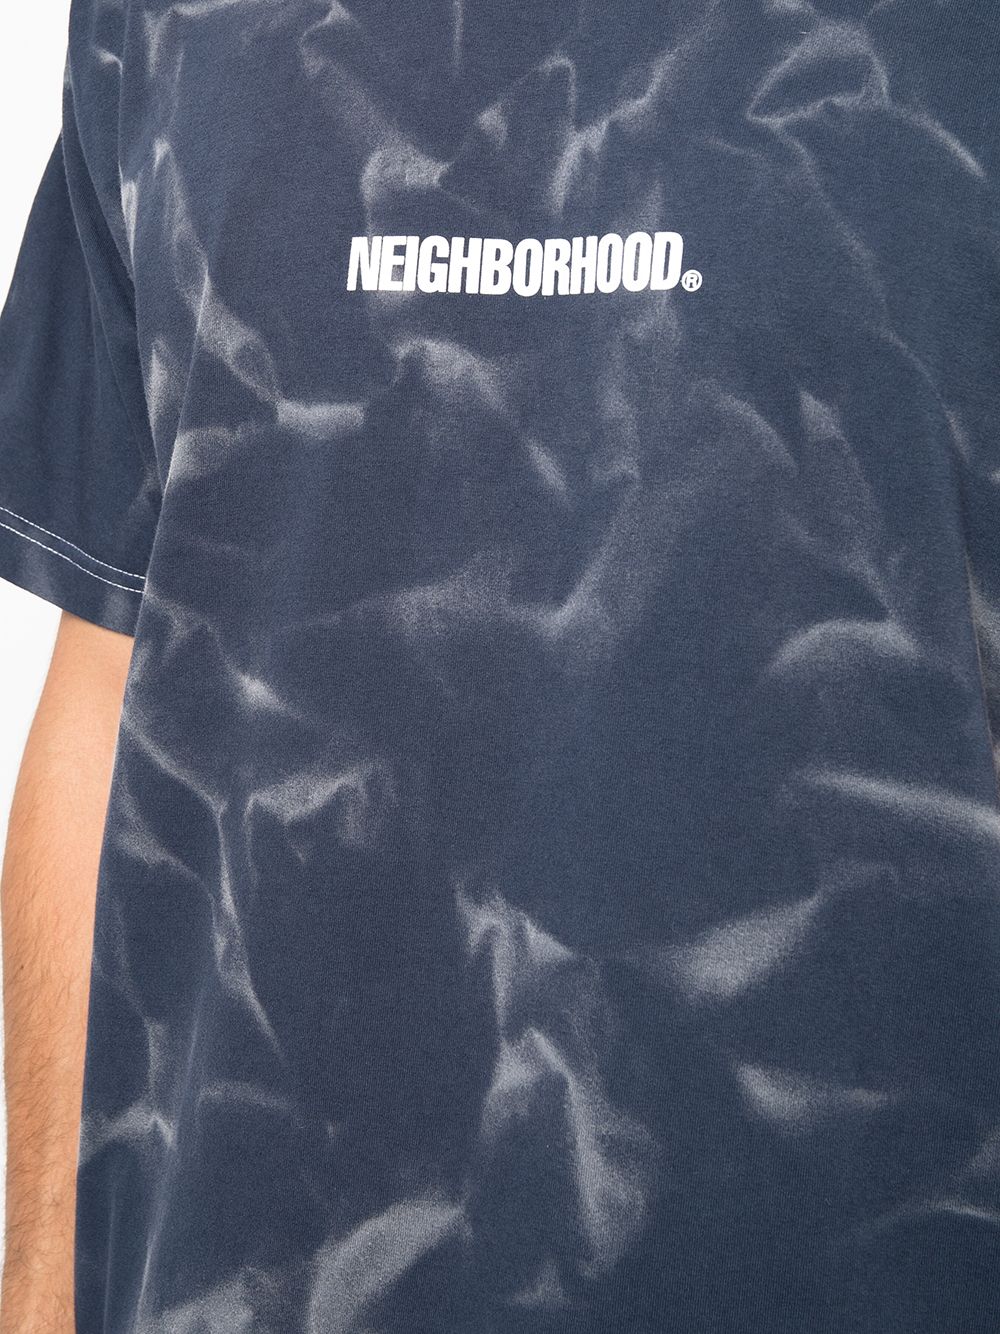 фото Neighborhood футболка с логотипом